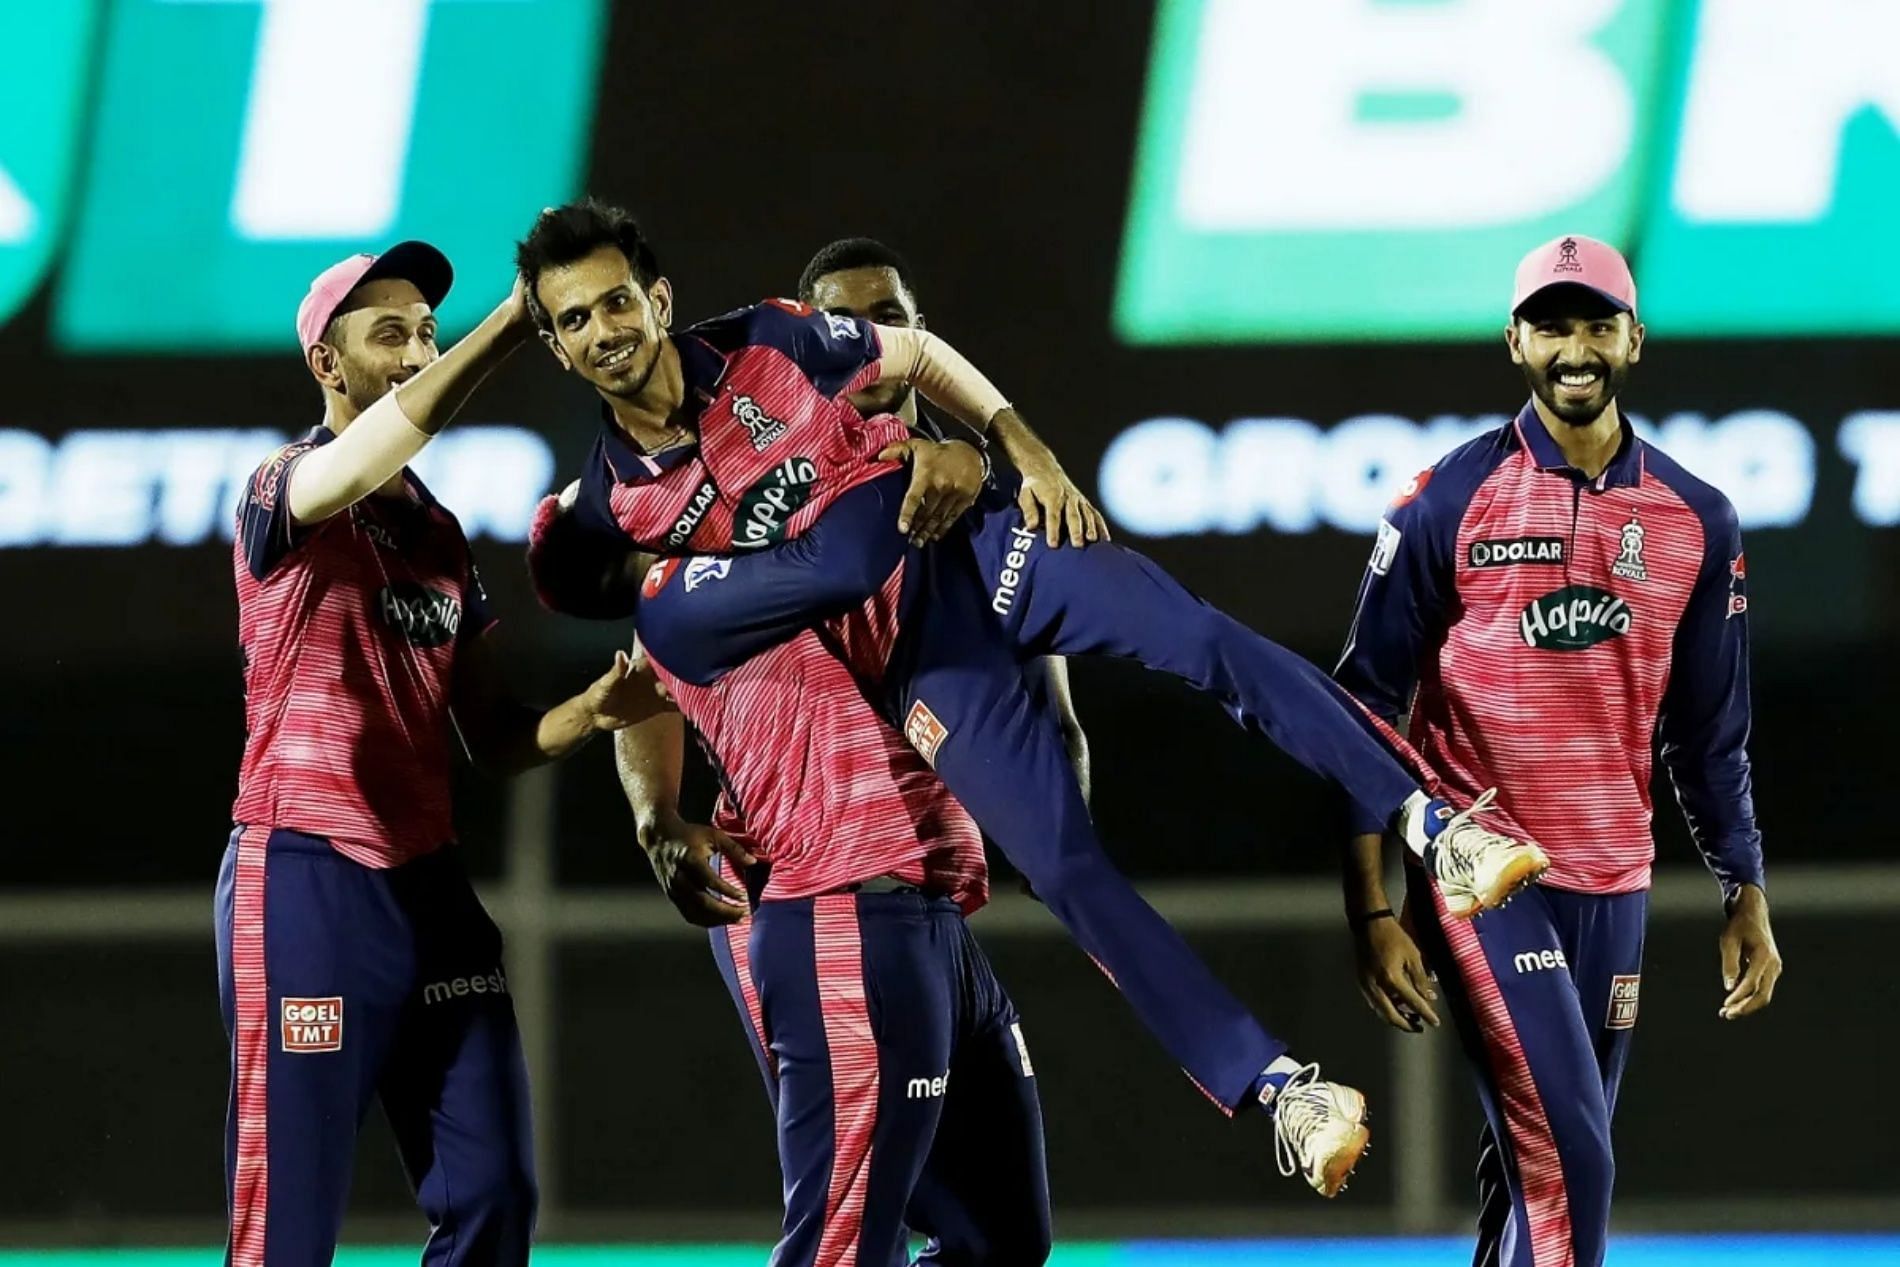 RR leggie Yuzvendra Chahal celebrates a wicket with teammates. Pic: IPLT20.COM